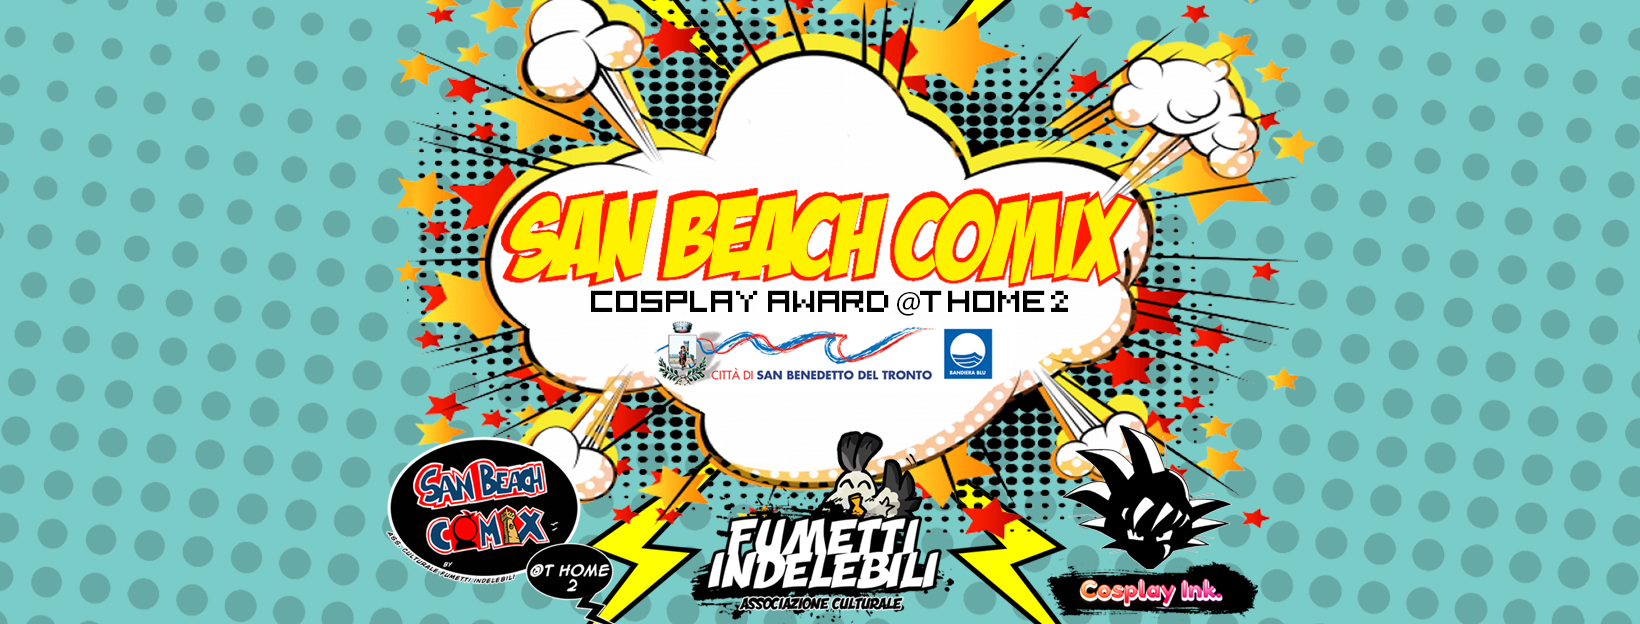 San Beach Comix @t Home: Cosplay Award @t Home 2